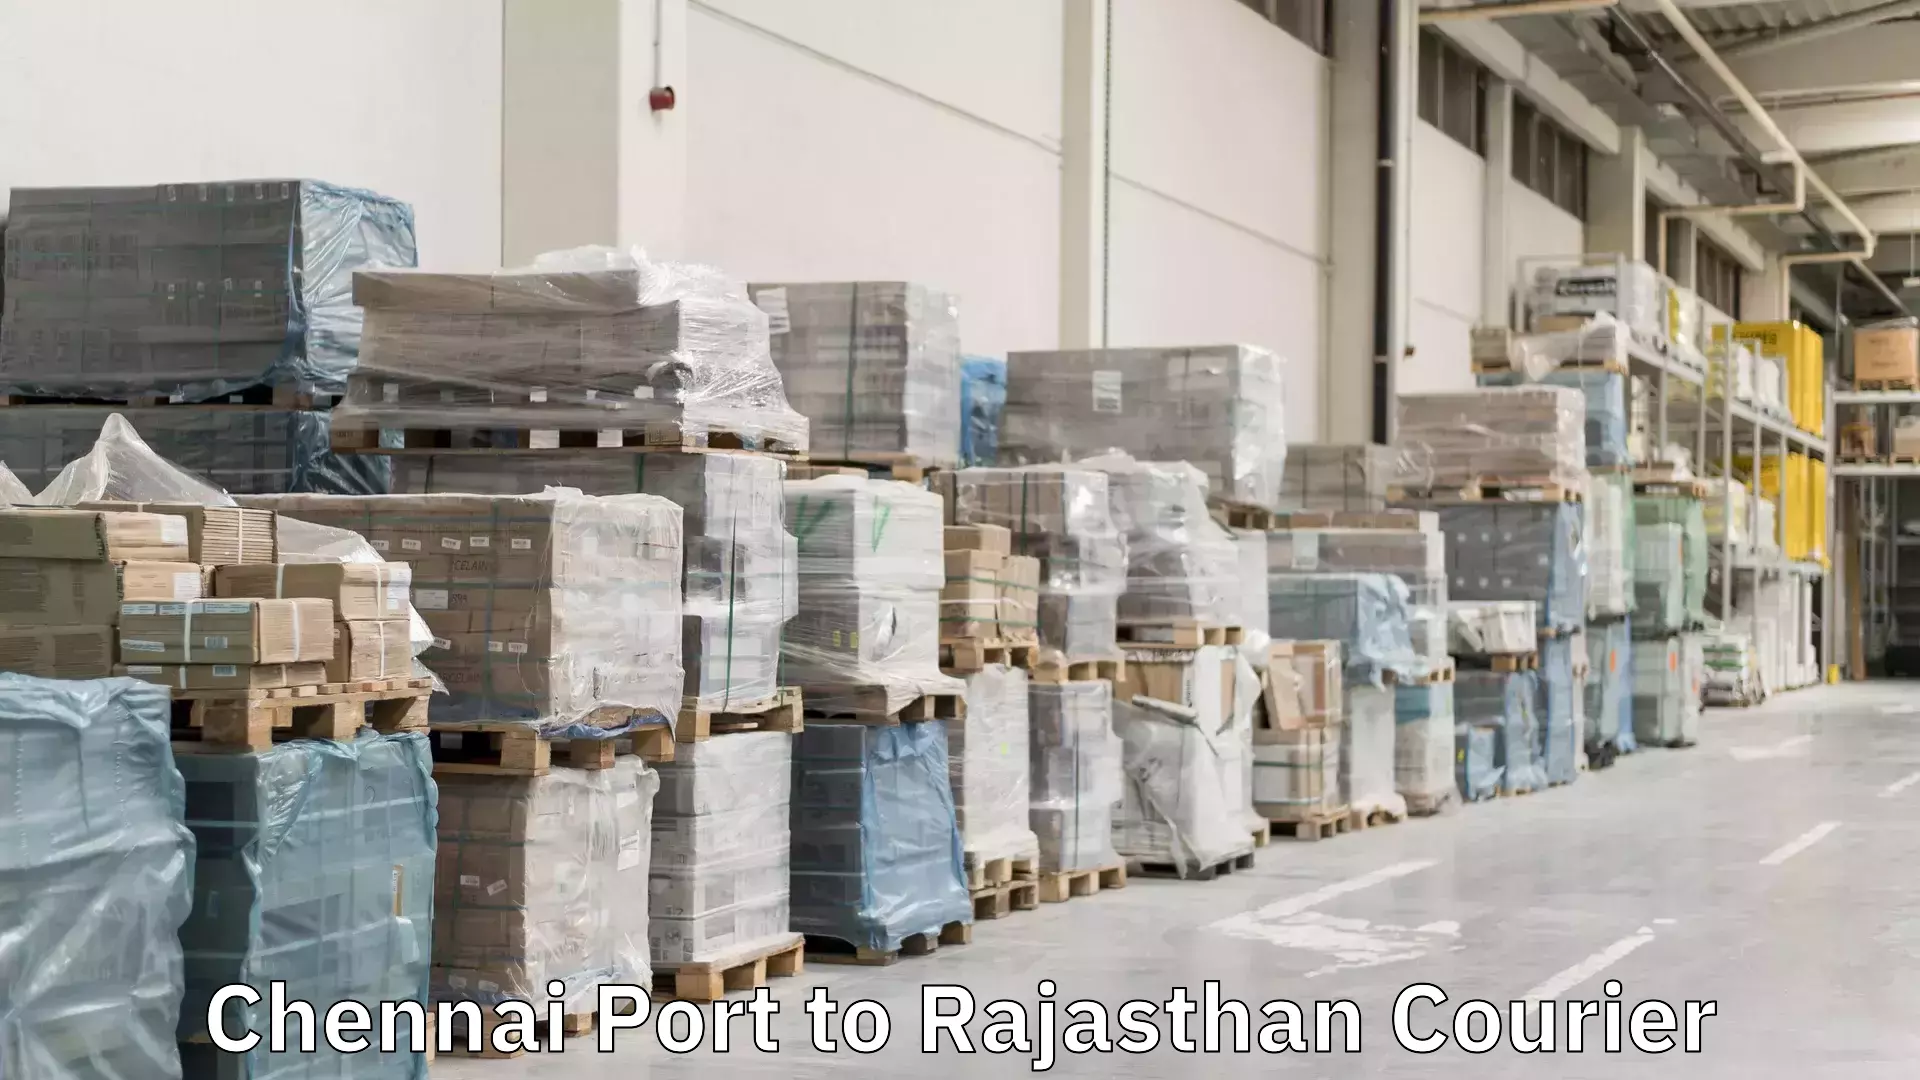 Door-to-door freight service in Chennai Port to Rajasthan